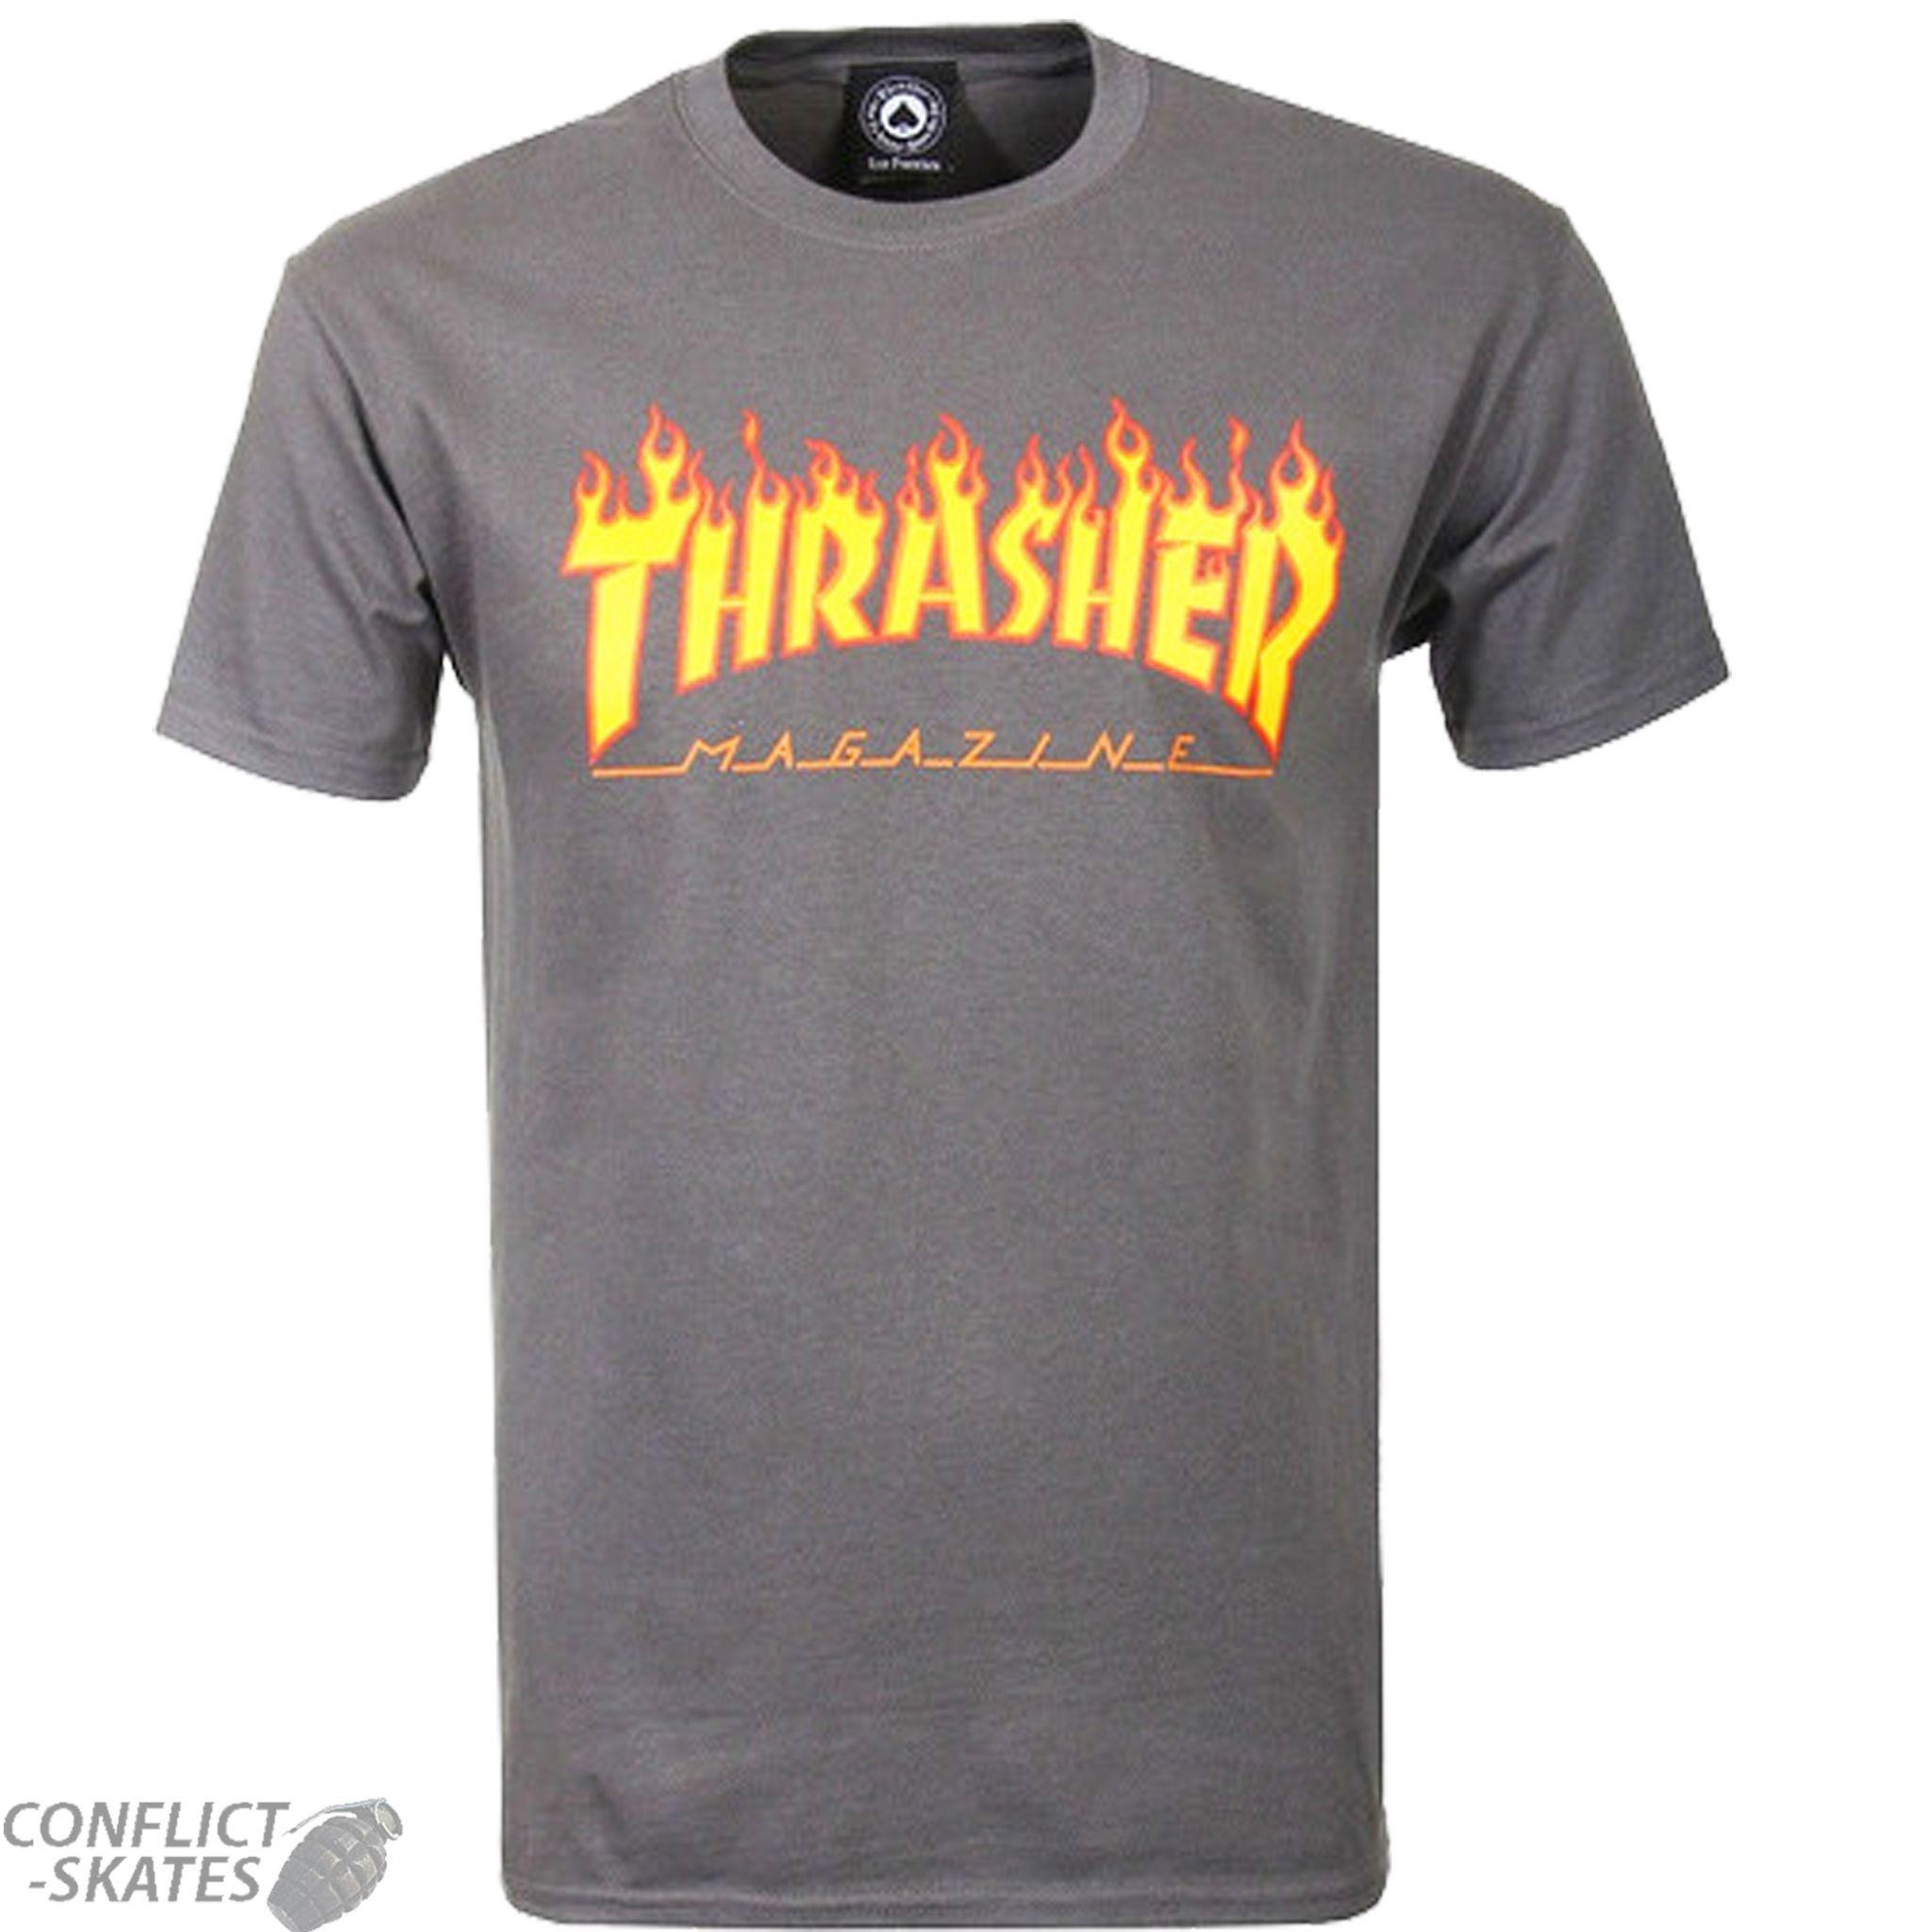 Thrasher Magazine Flames Skateboard Logo - THRASHER MAGAZINE Flame Logo Skateboard T Shirt Charcoal Grey S M L